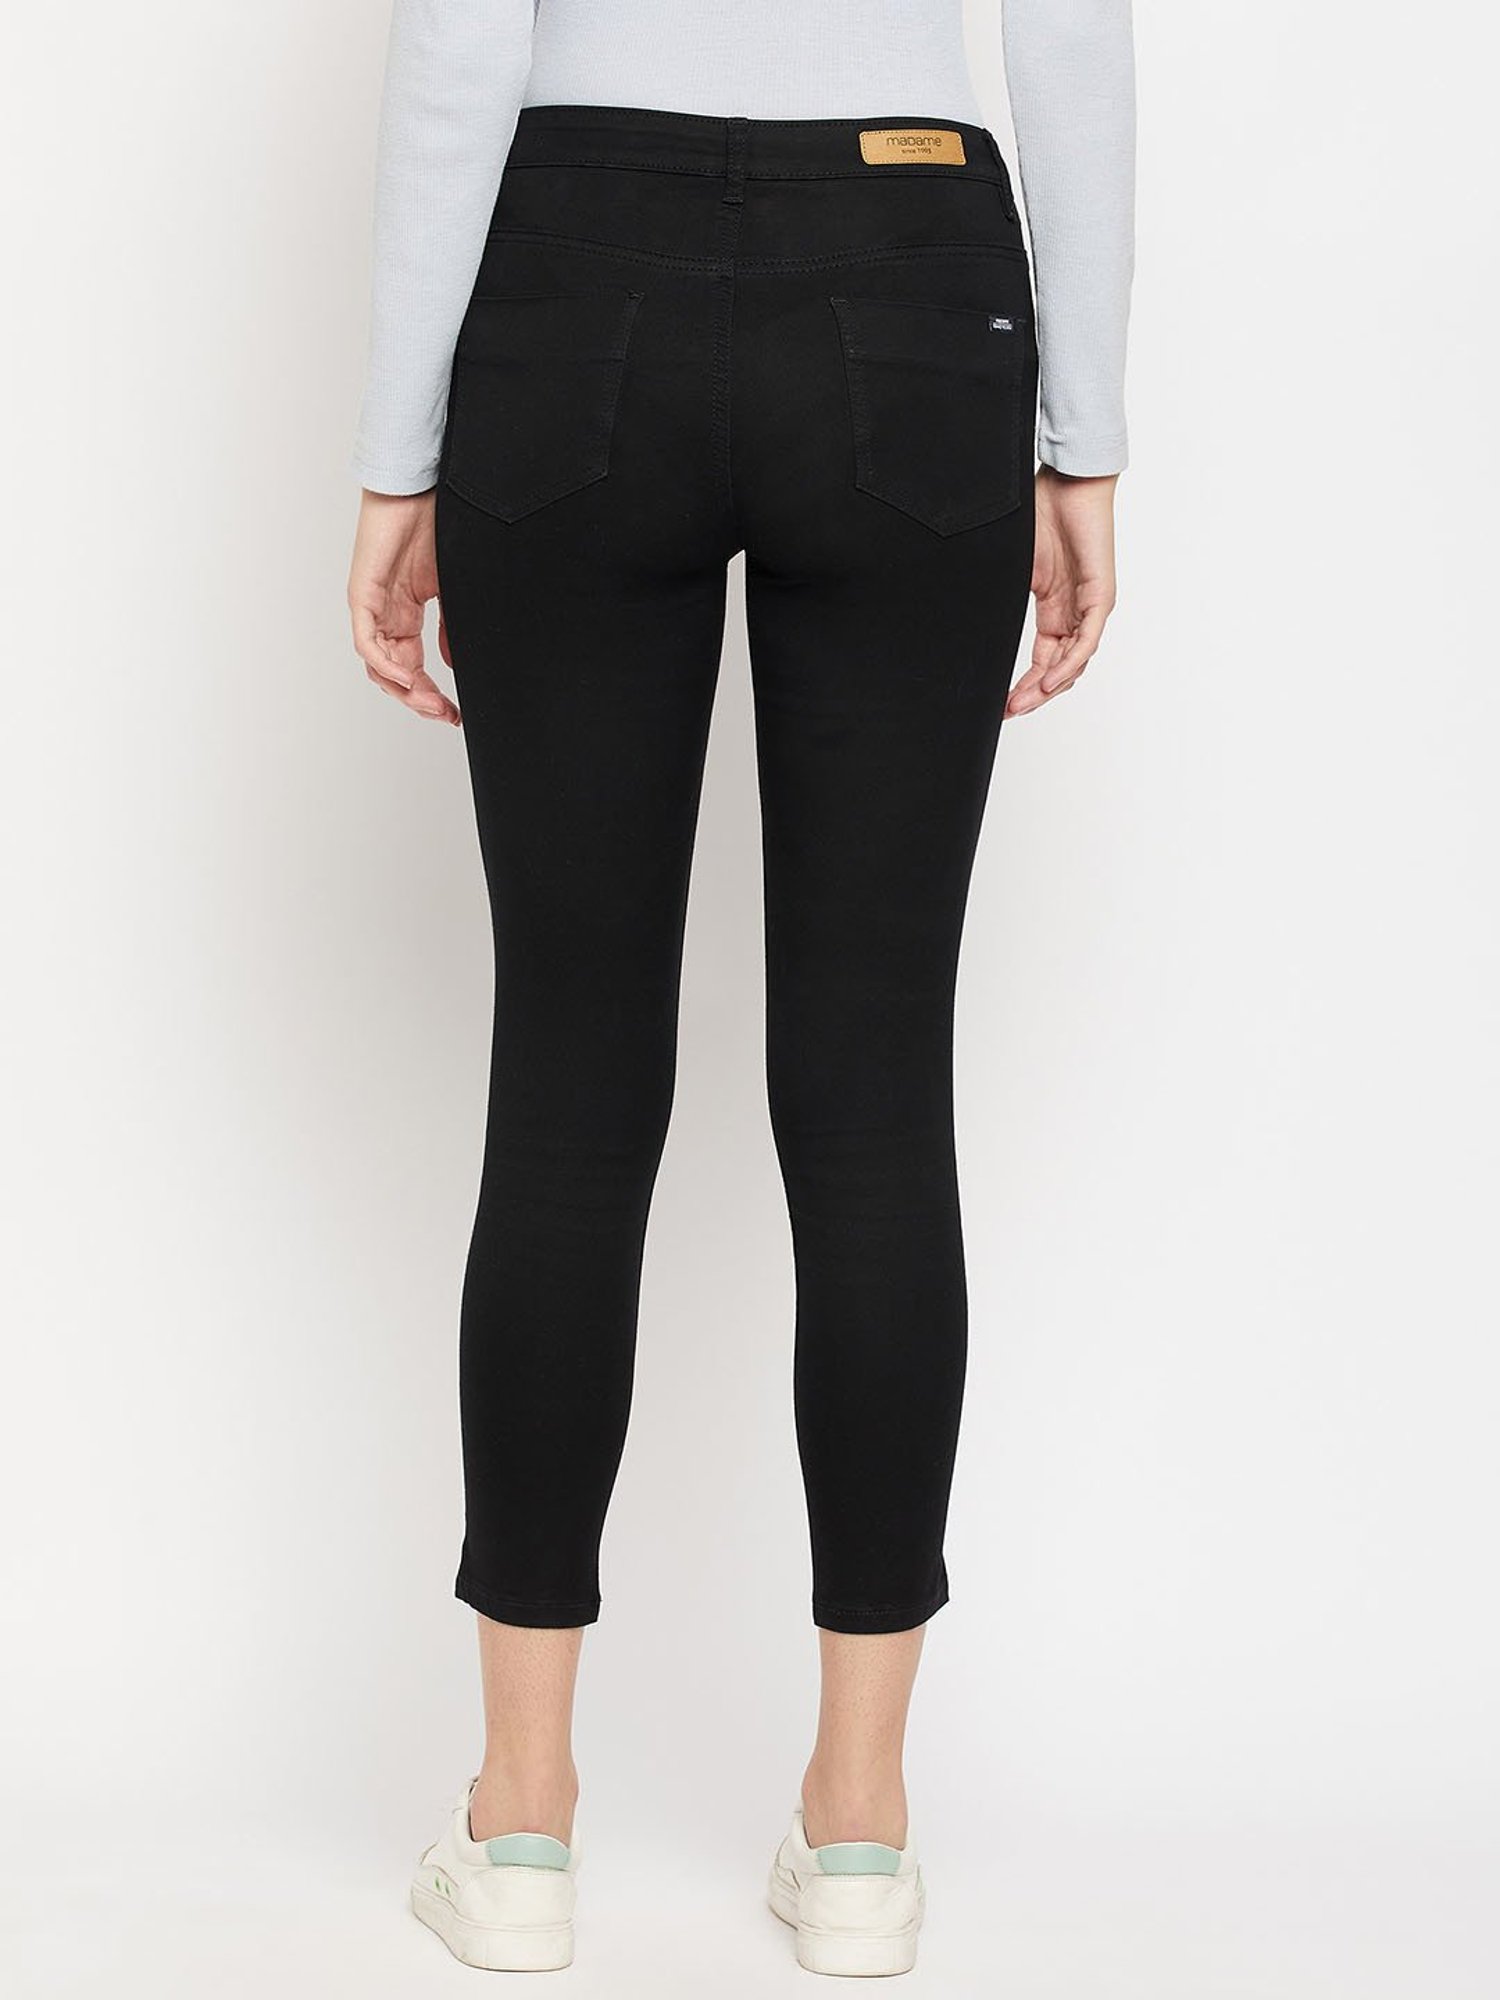 Buy Madame Black Solid Trouser online